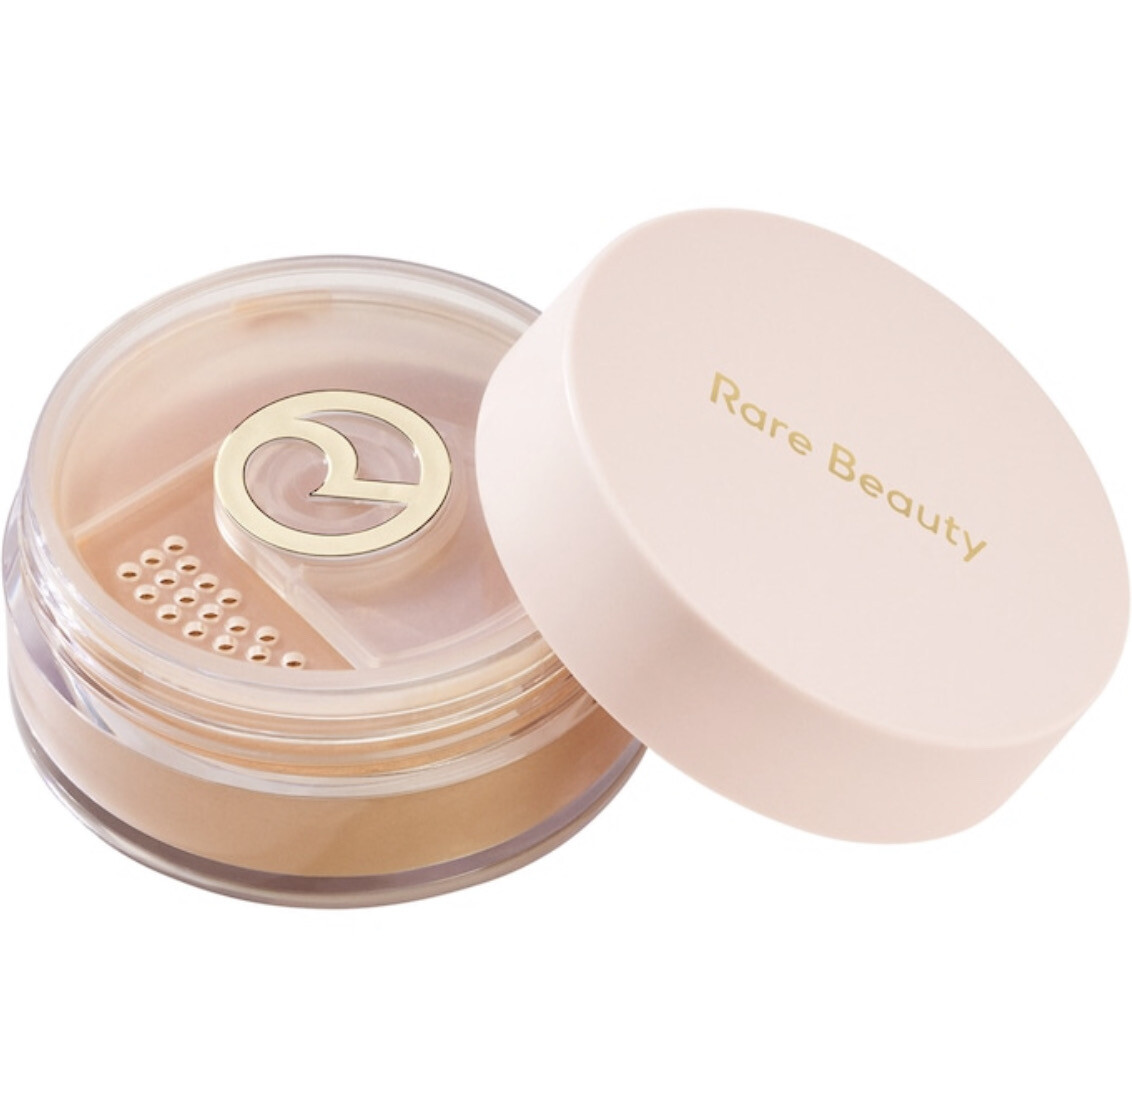 Rare Beauty - Always an Optimist Soft Radiance Setting Powder | Medium - warm honey for medium-to-medium deep complexions